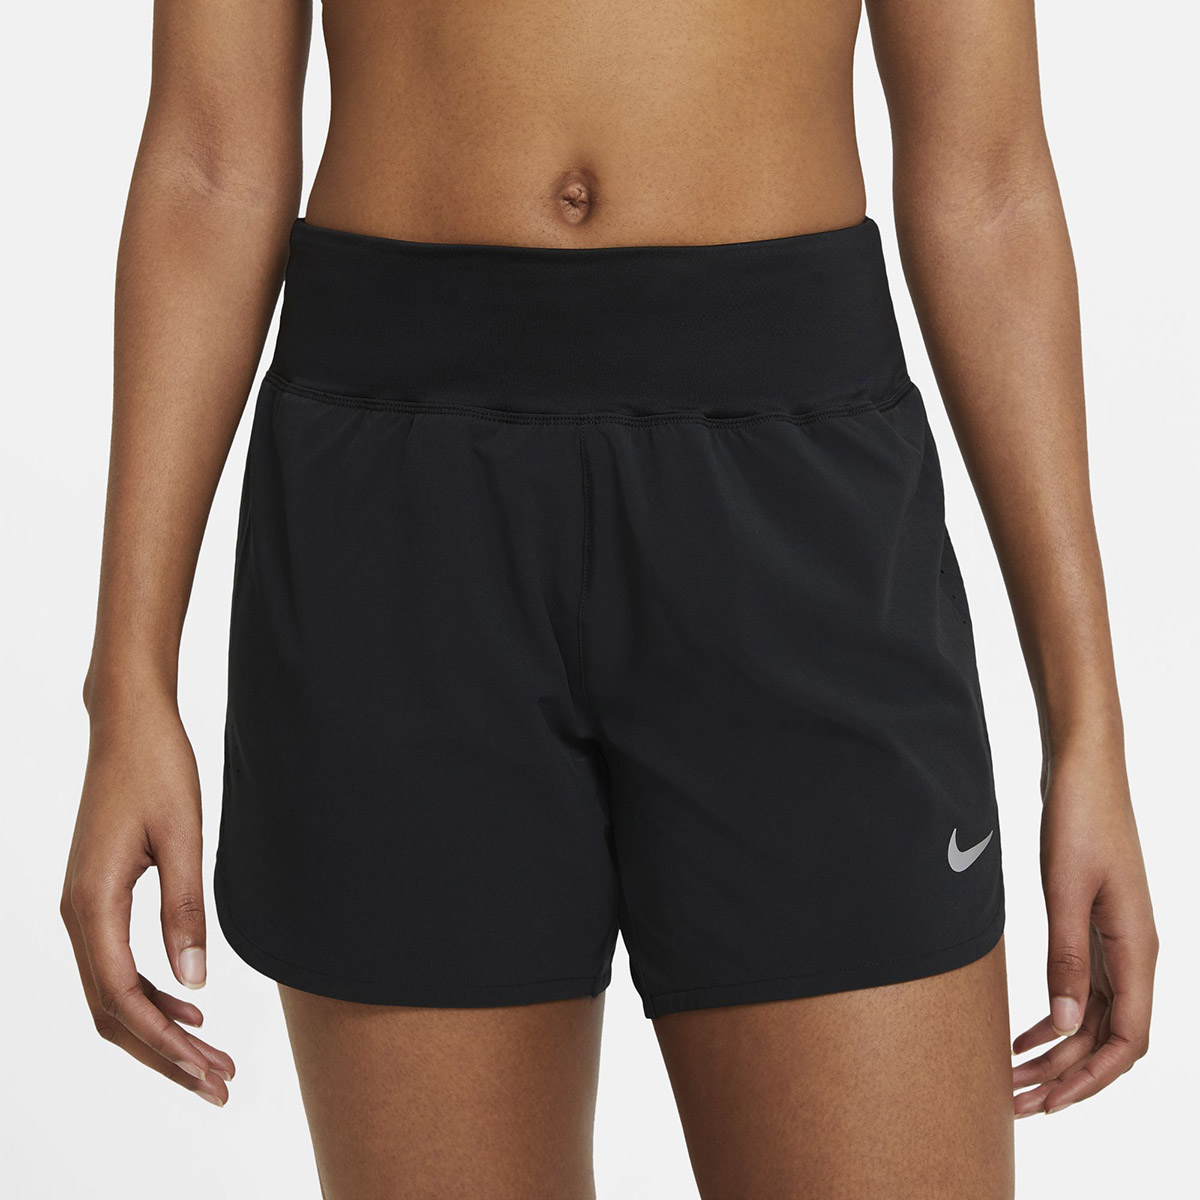 Nike Eclipse Short, , large image number null